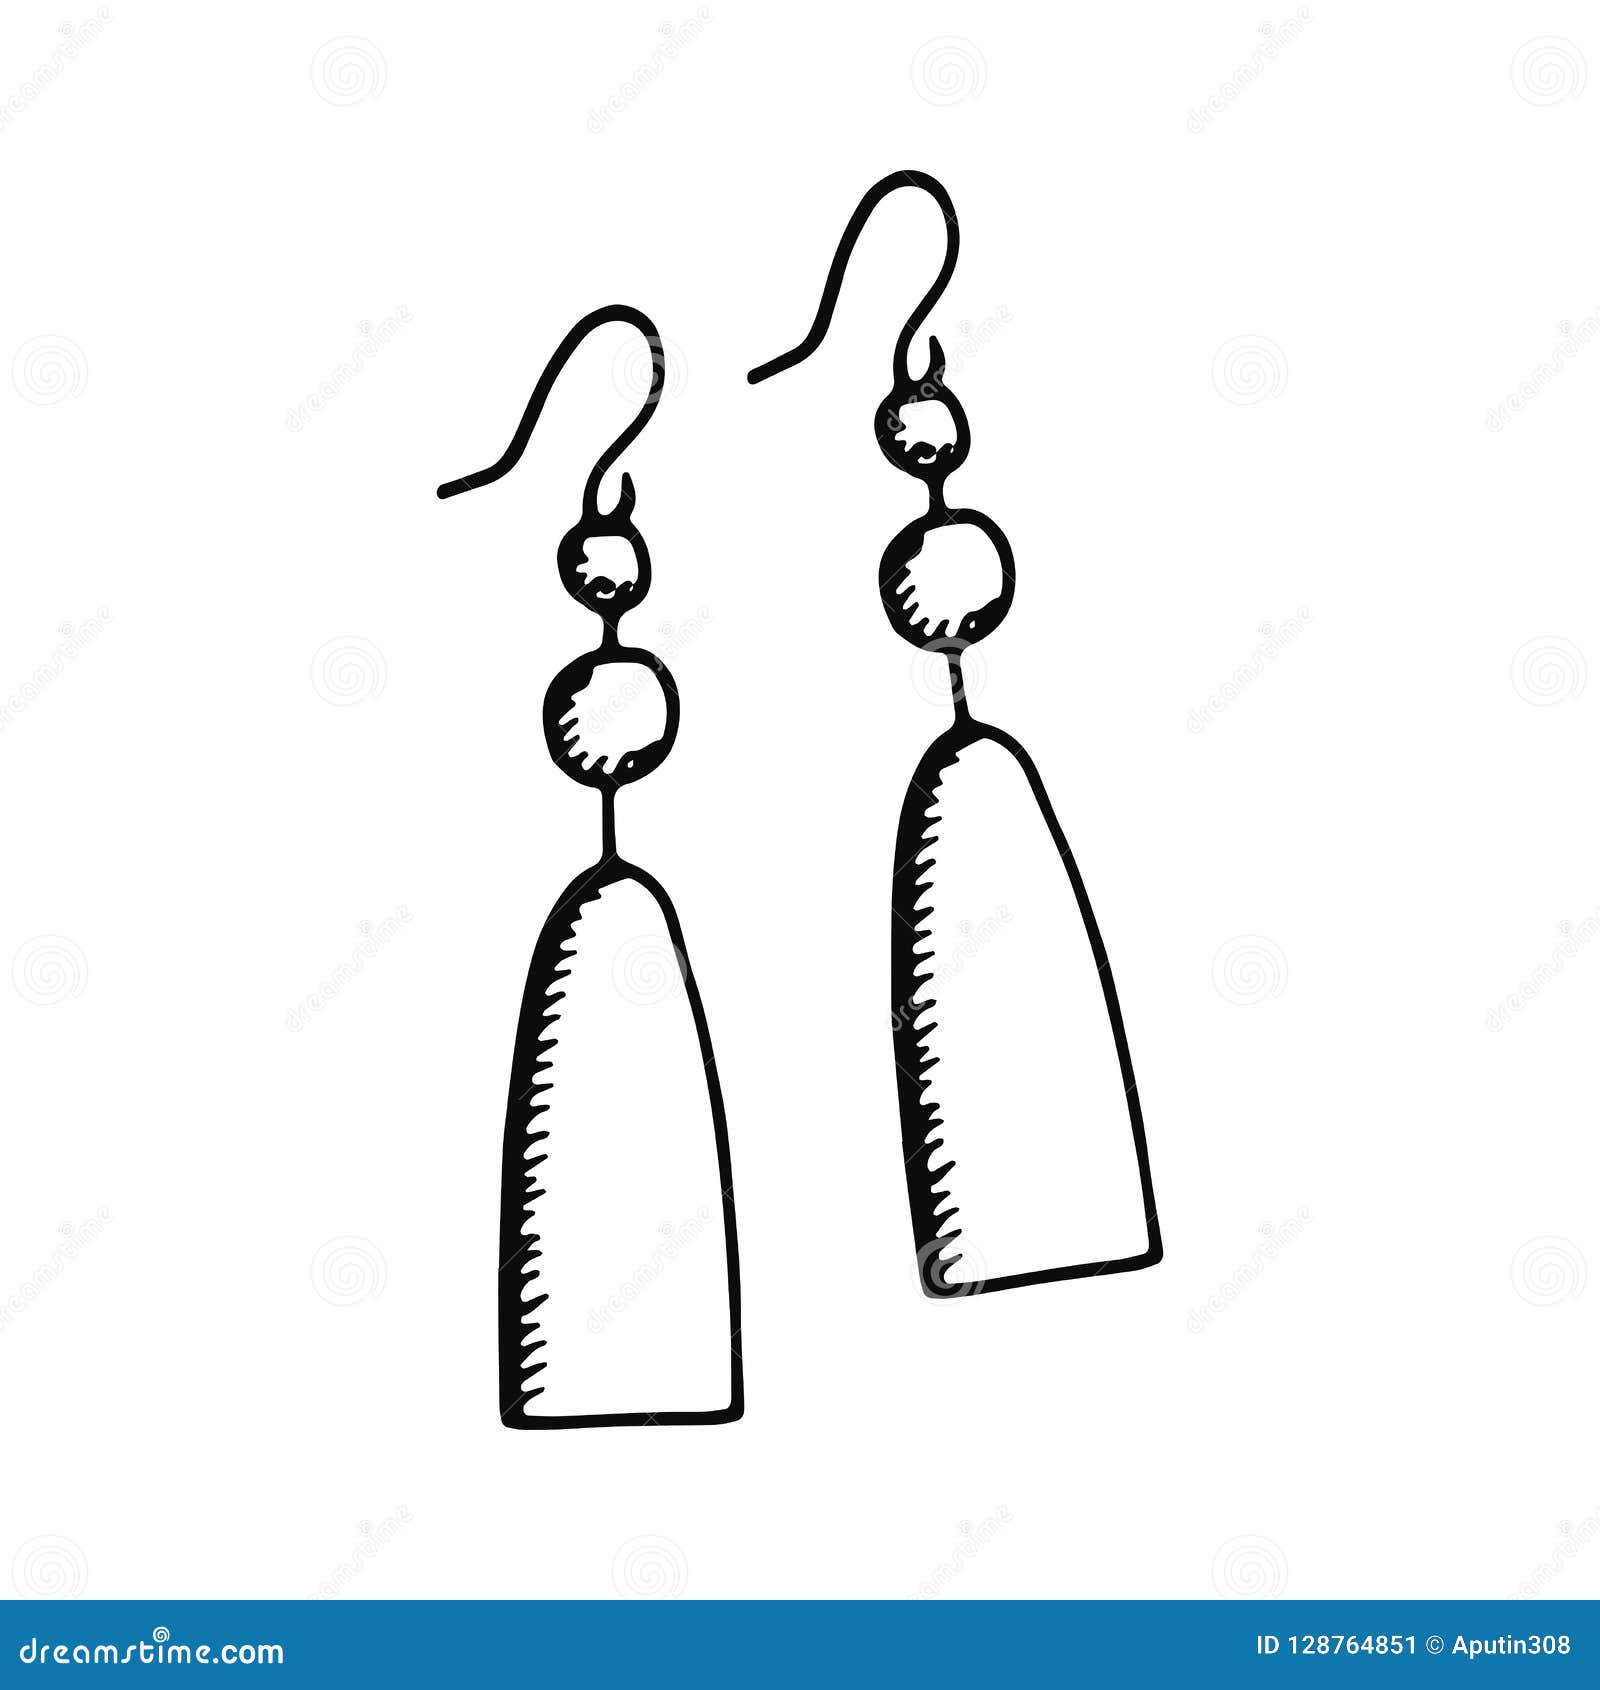 Earrings line drawing Royalty Free Vector Image